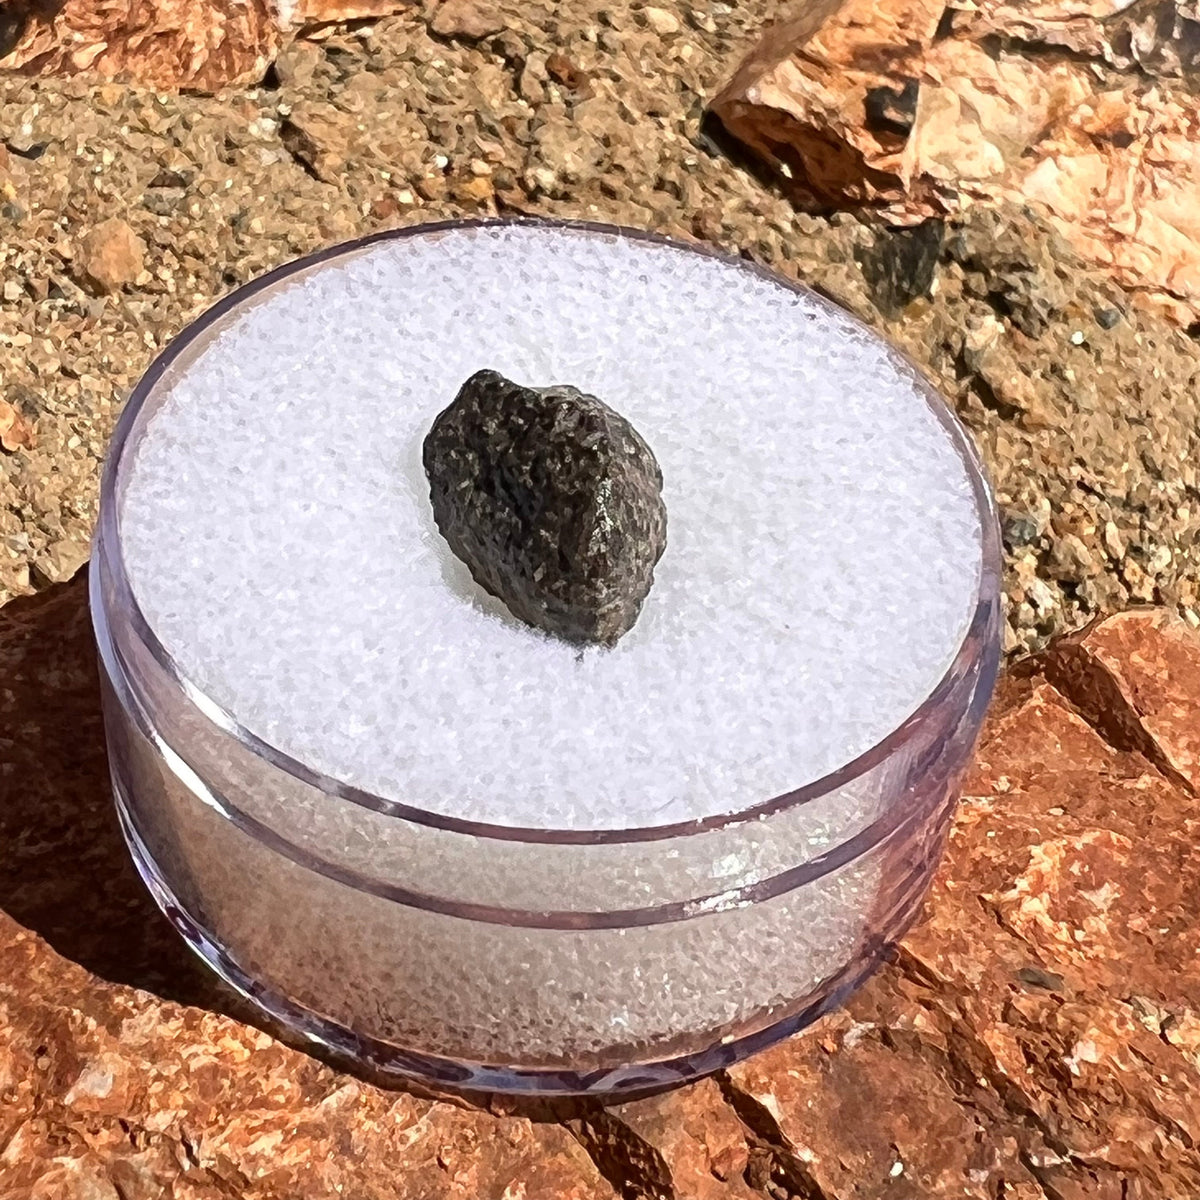 NWA 12269 Mars Meteorite fragment with Window #48-Moldavite Life